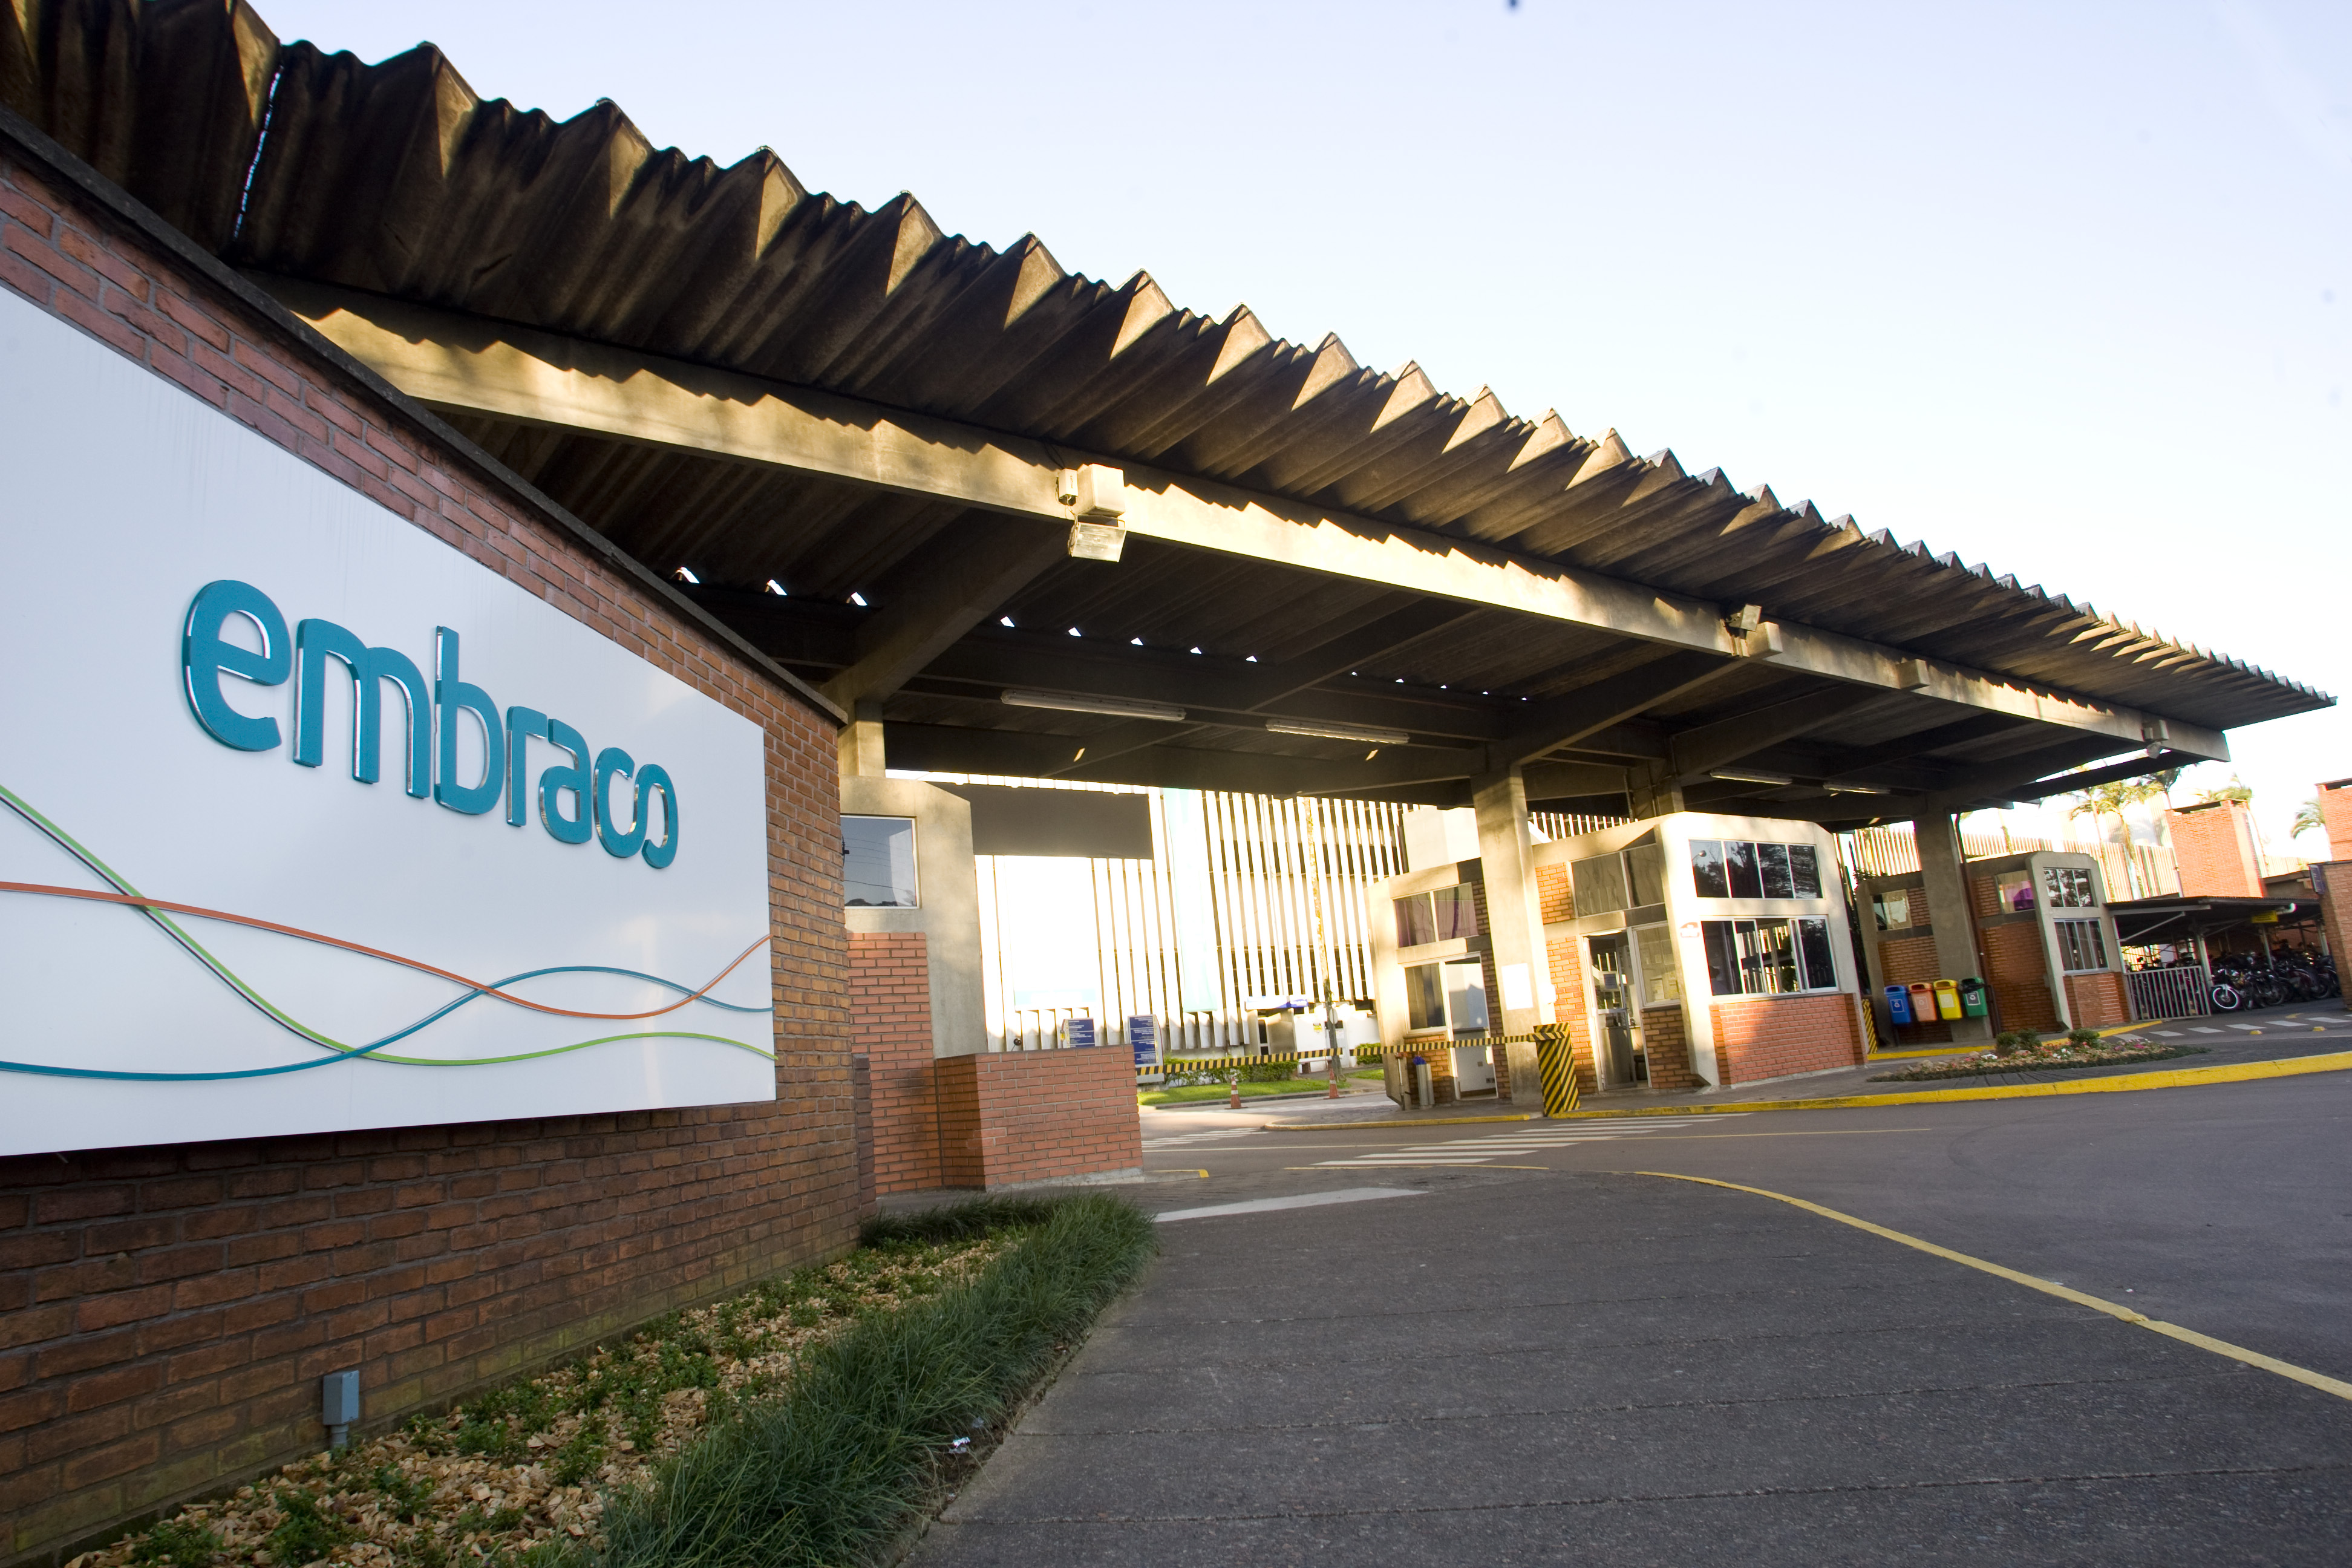 Embraco advances towards production excellence - Embraco